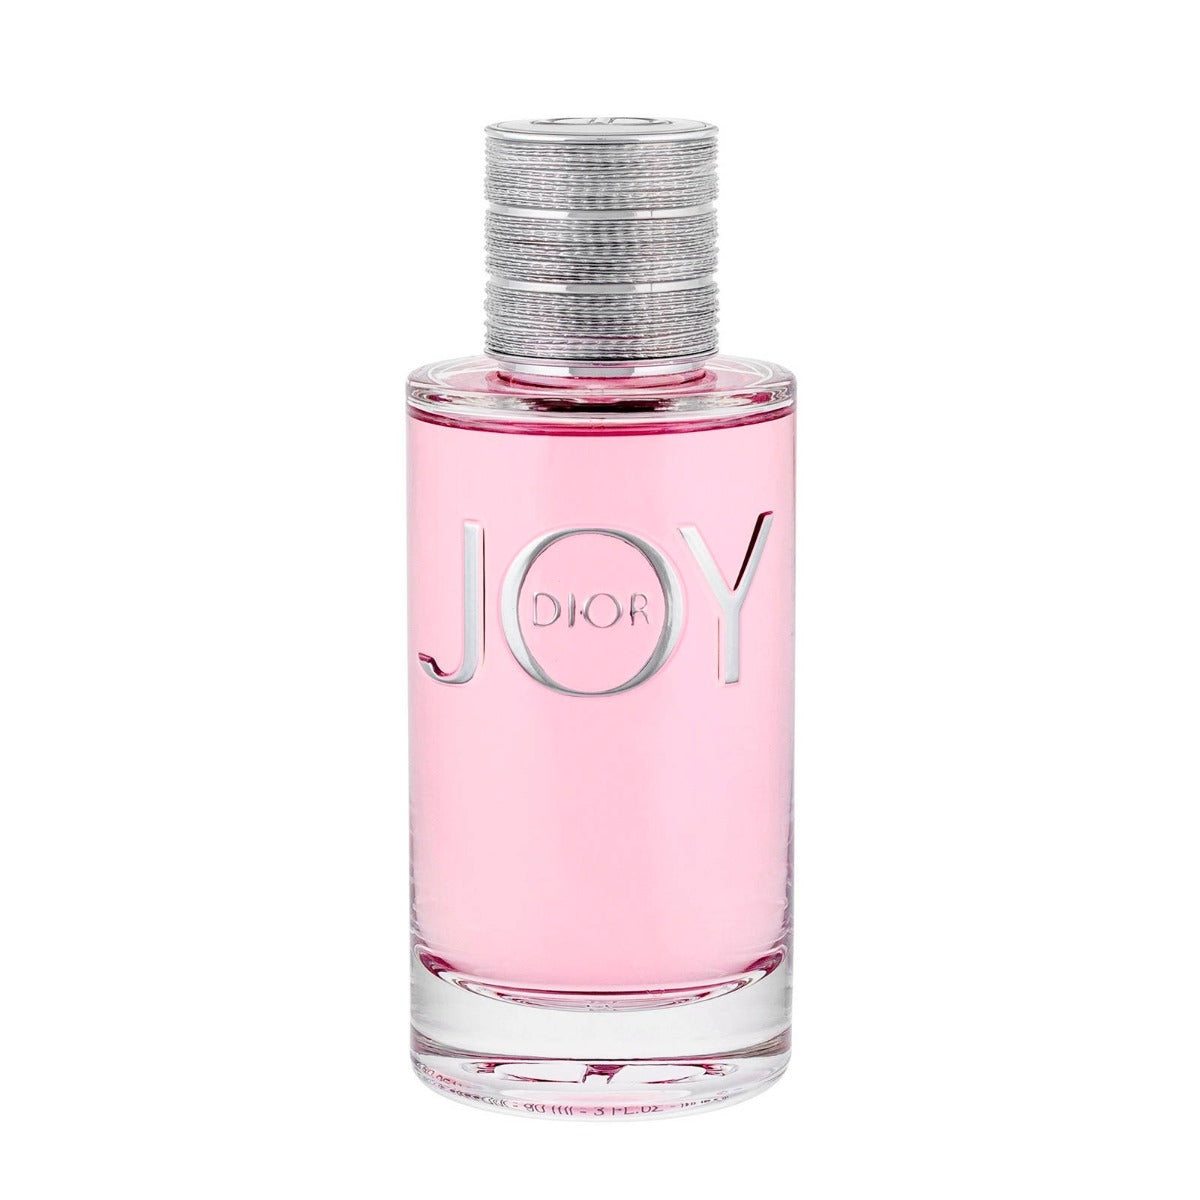 Dior Joy Perfume For Women - EDP, 90ml - samawa perfumes 